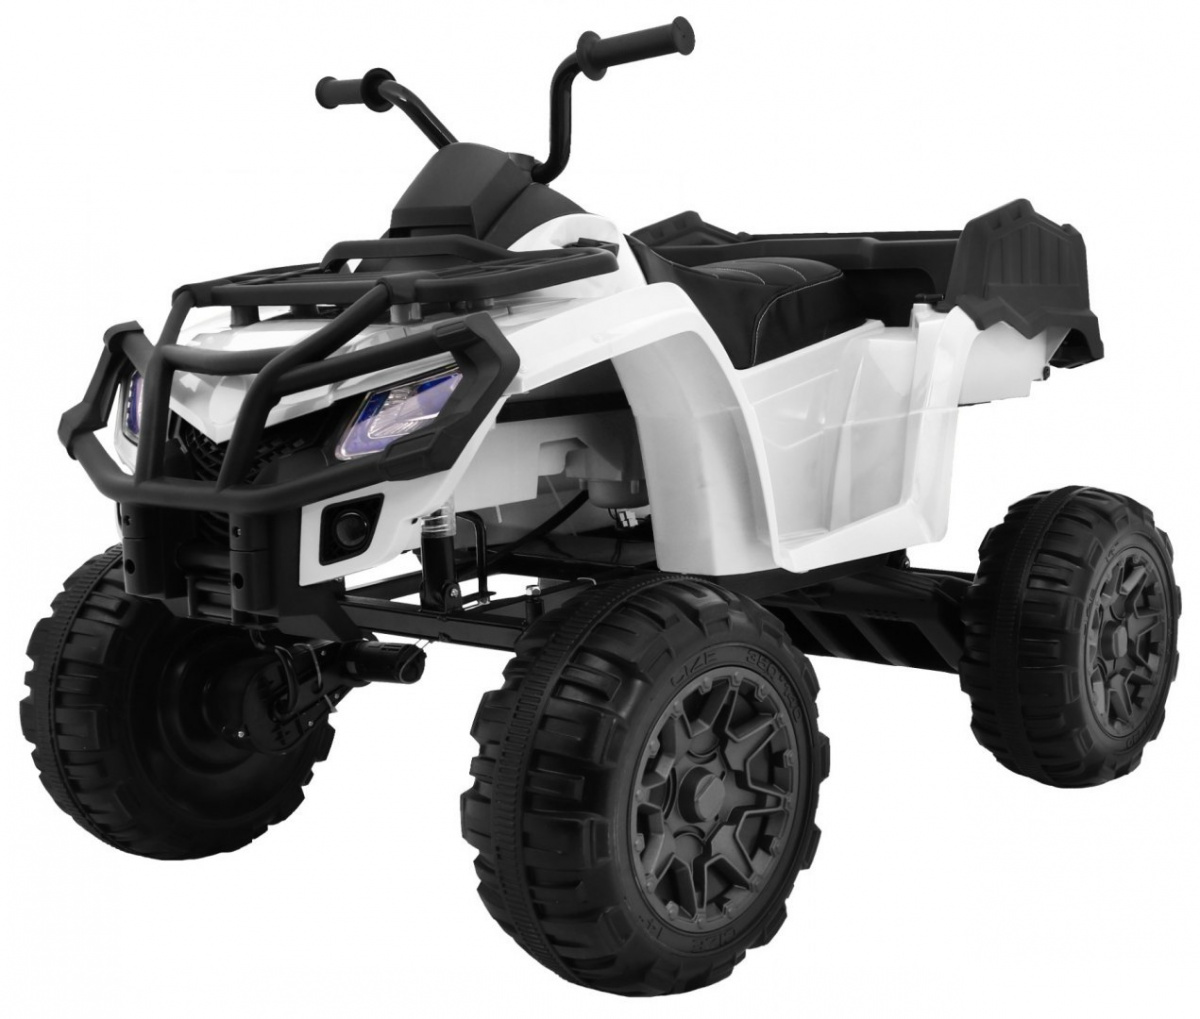  Dětská elektrická čtyřkolka ATV XL bílá